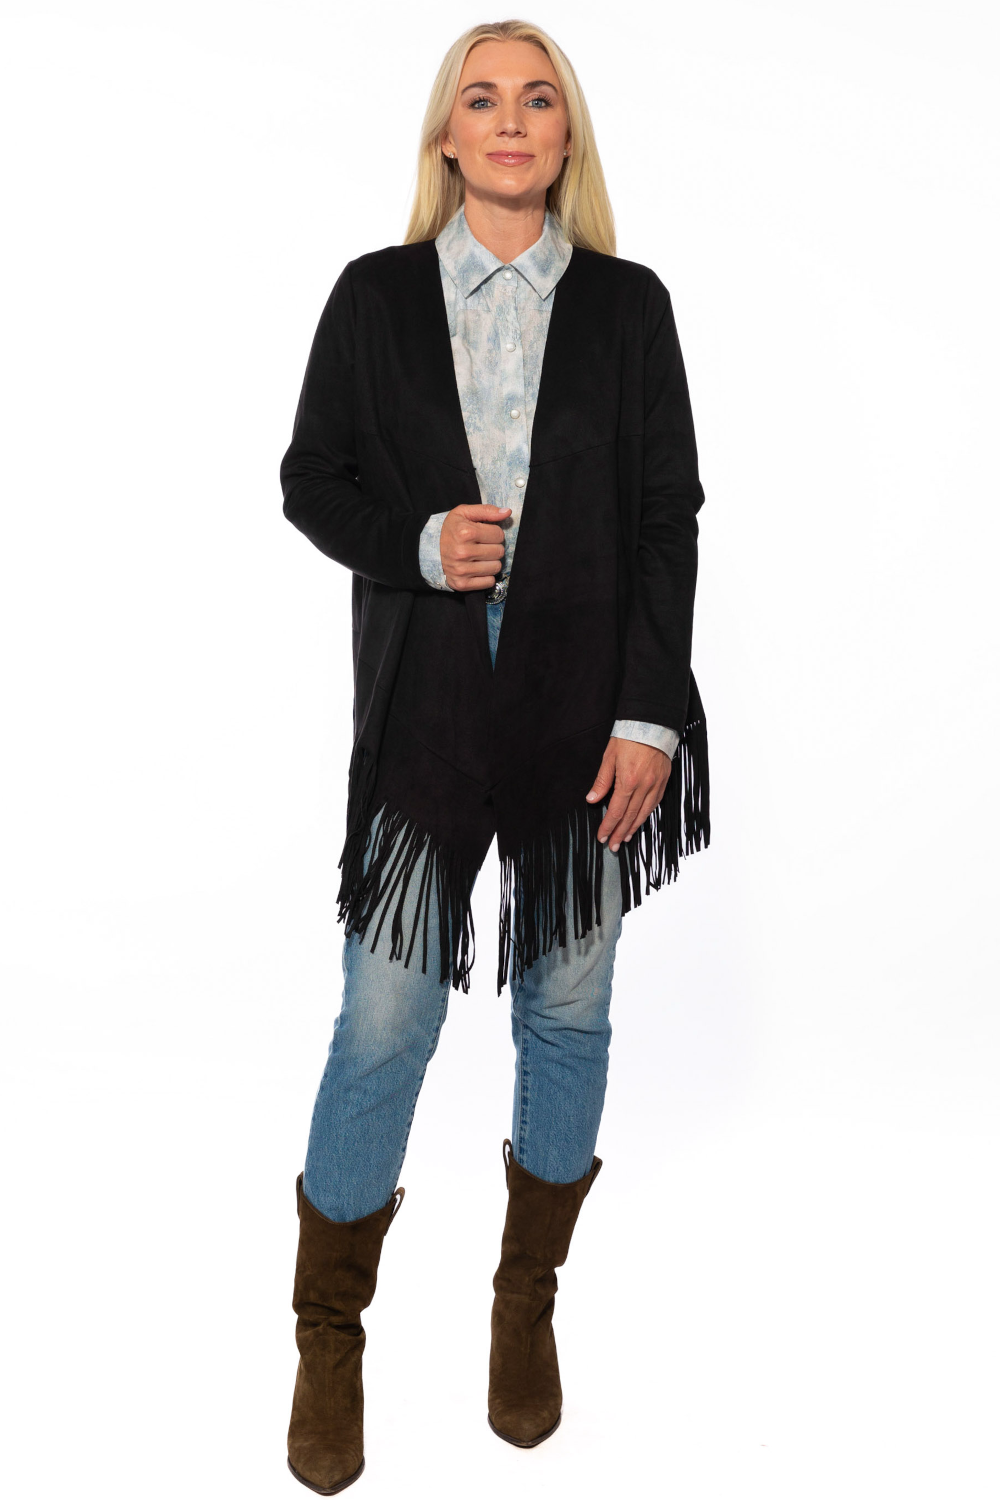 Jacket - Sequoia's Women's Jacket (PRE-SALE ONLY) Black Micro